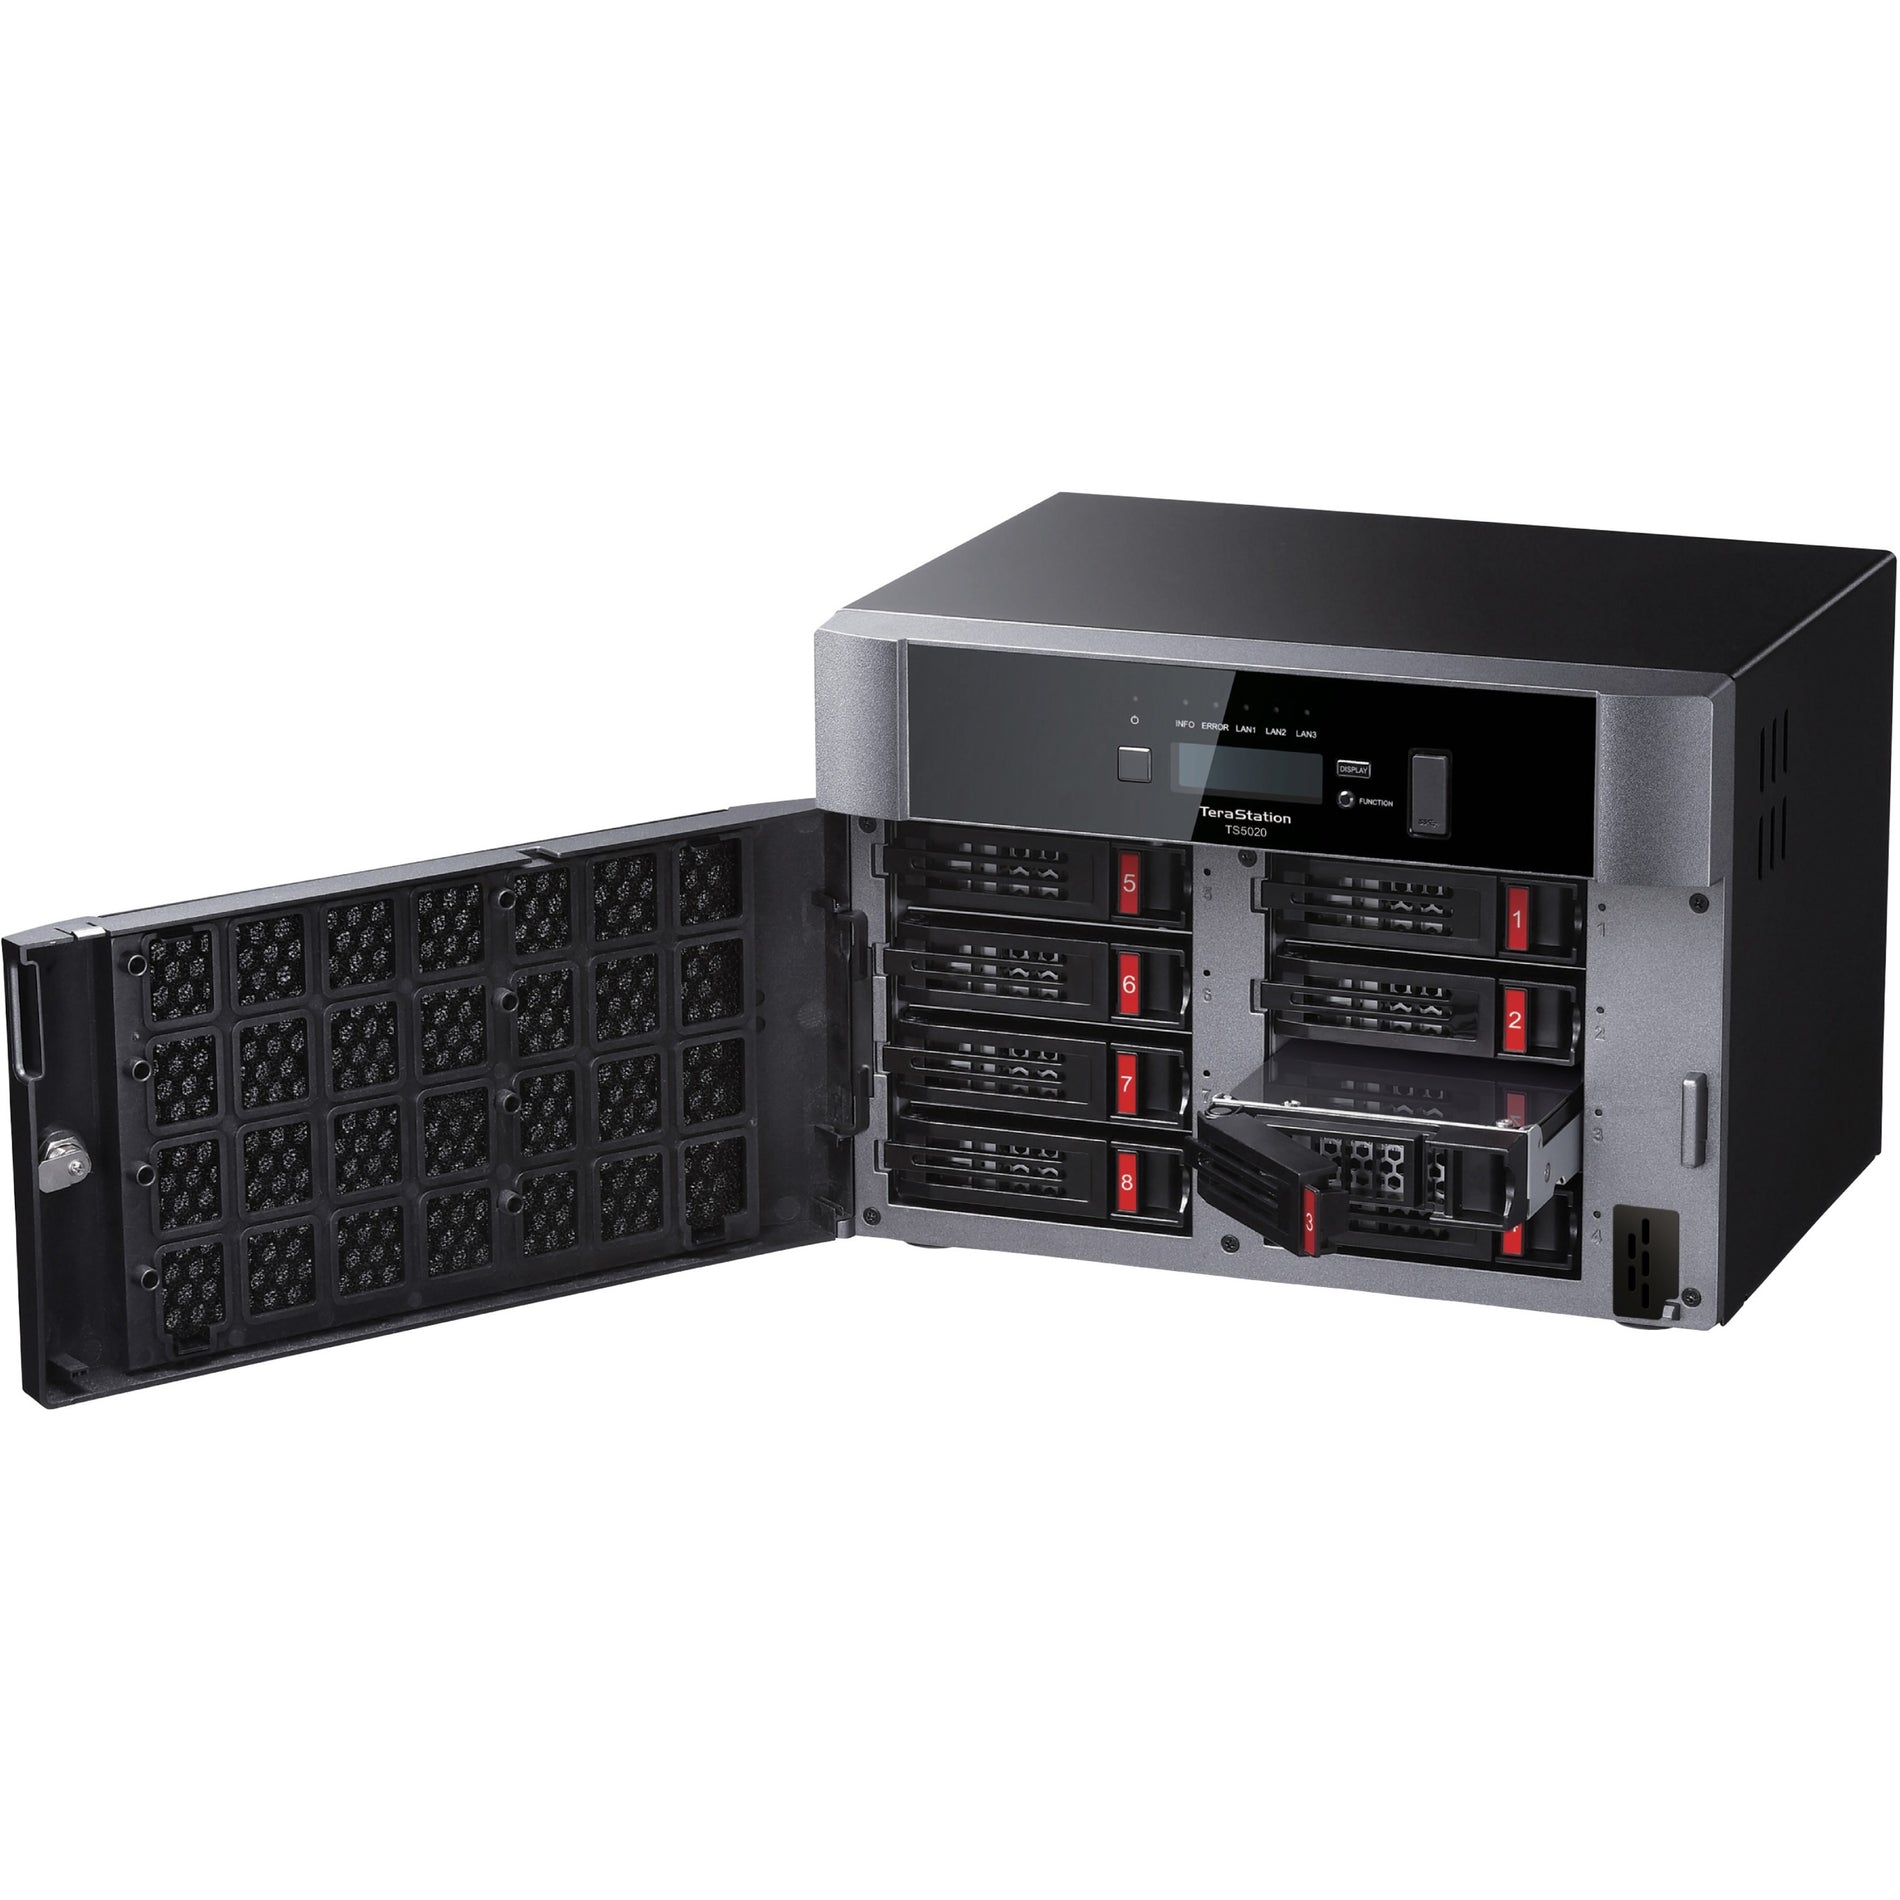 Buffalo TS5820DN8004 TeraStation TS5820DN SAN/NAS Storage System, 80TB Capacity, 10GbE Ethernet